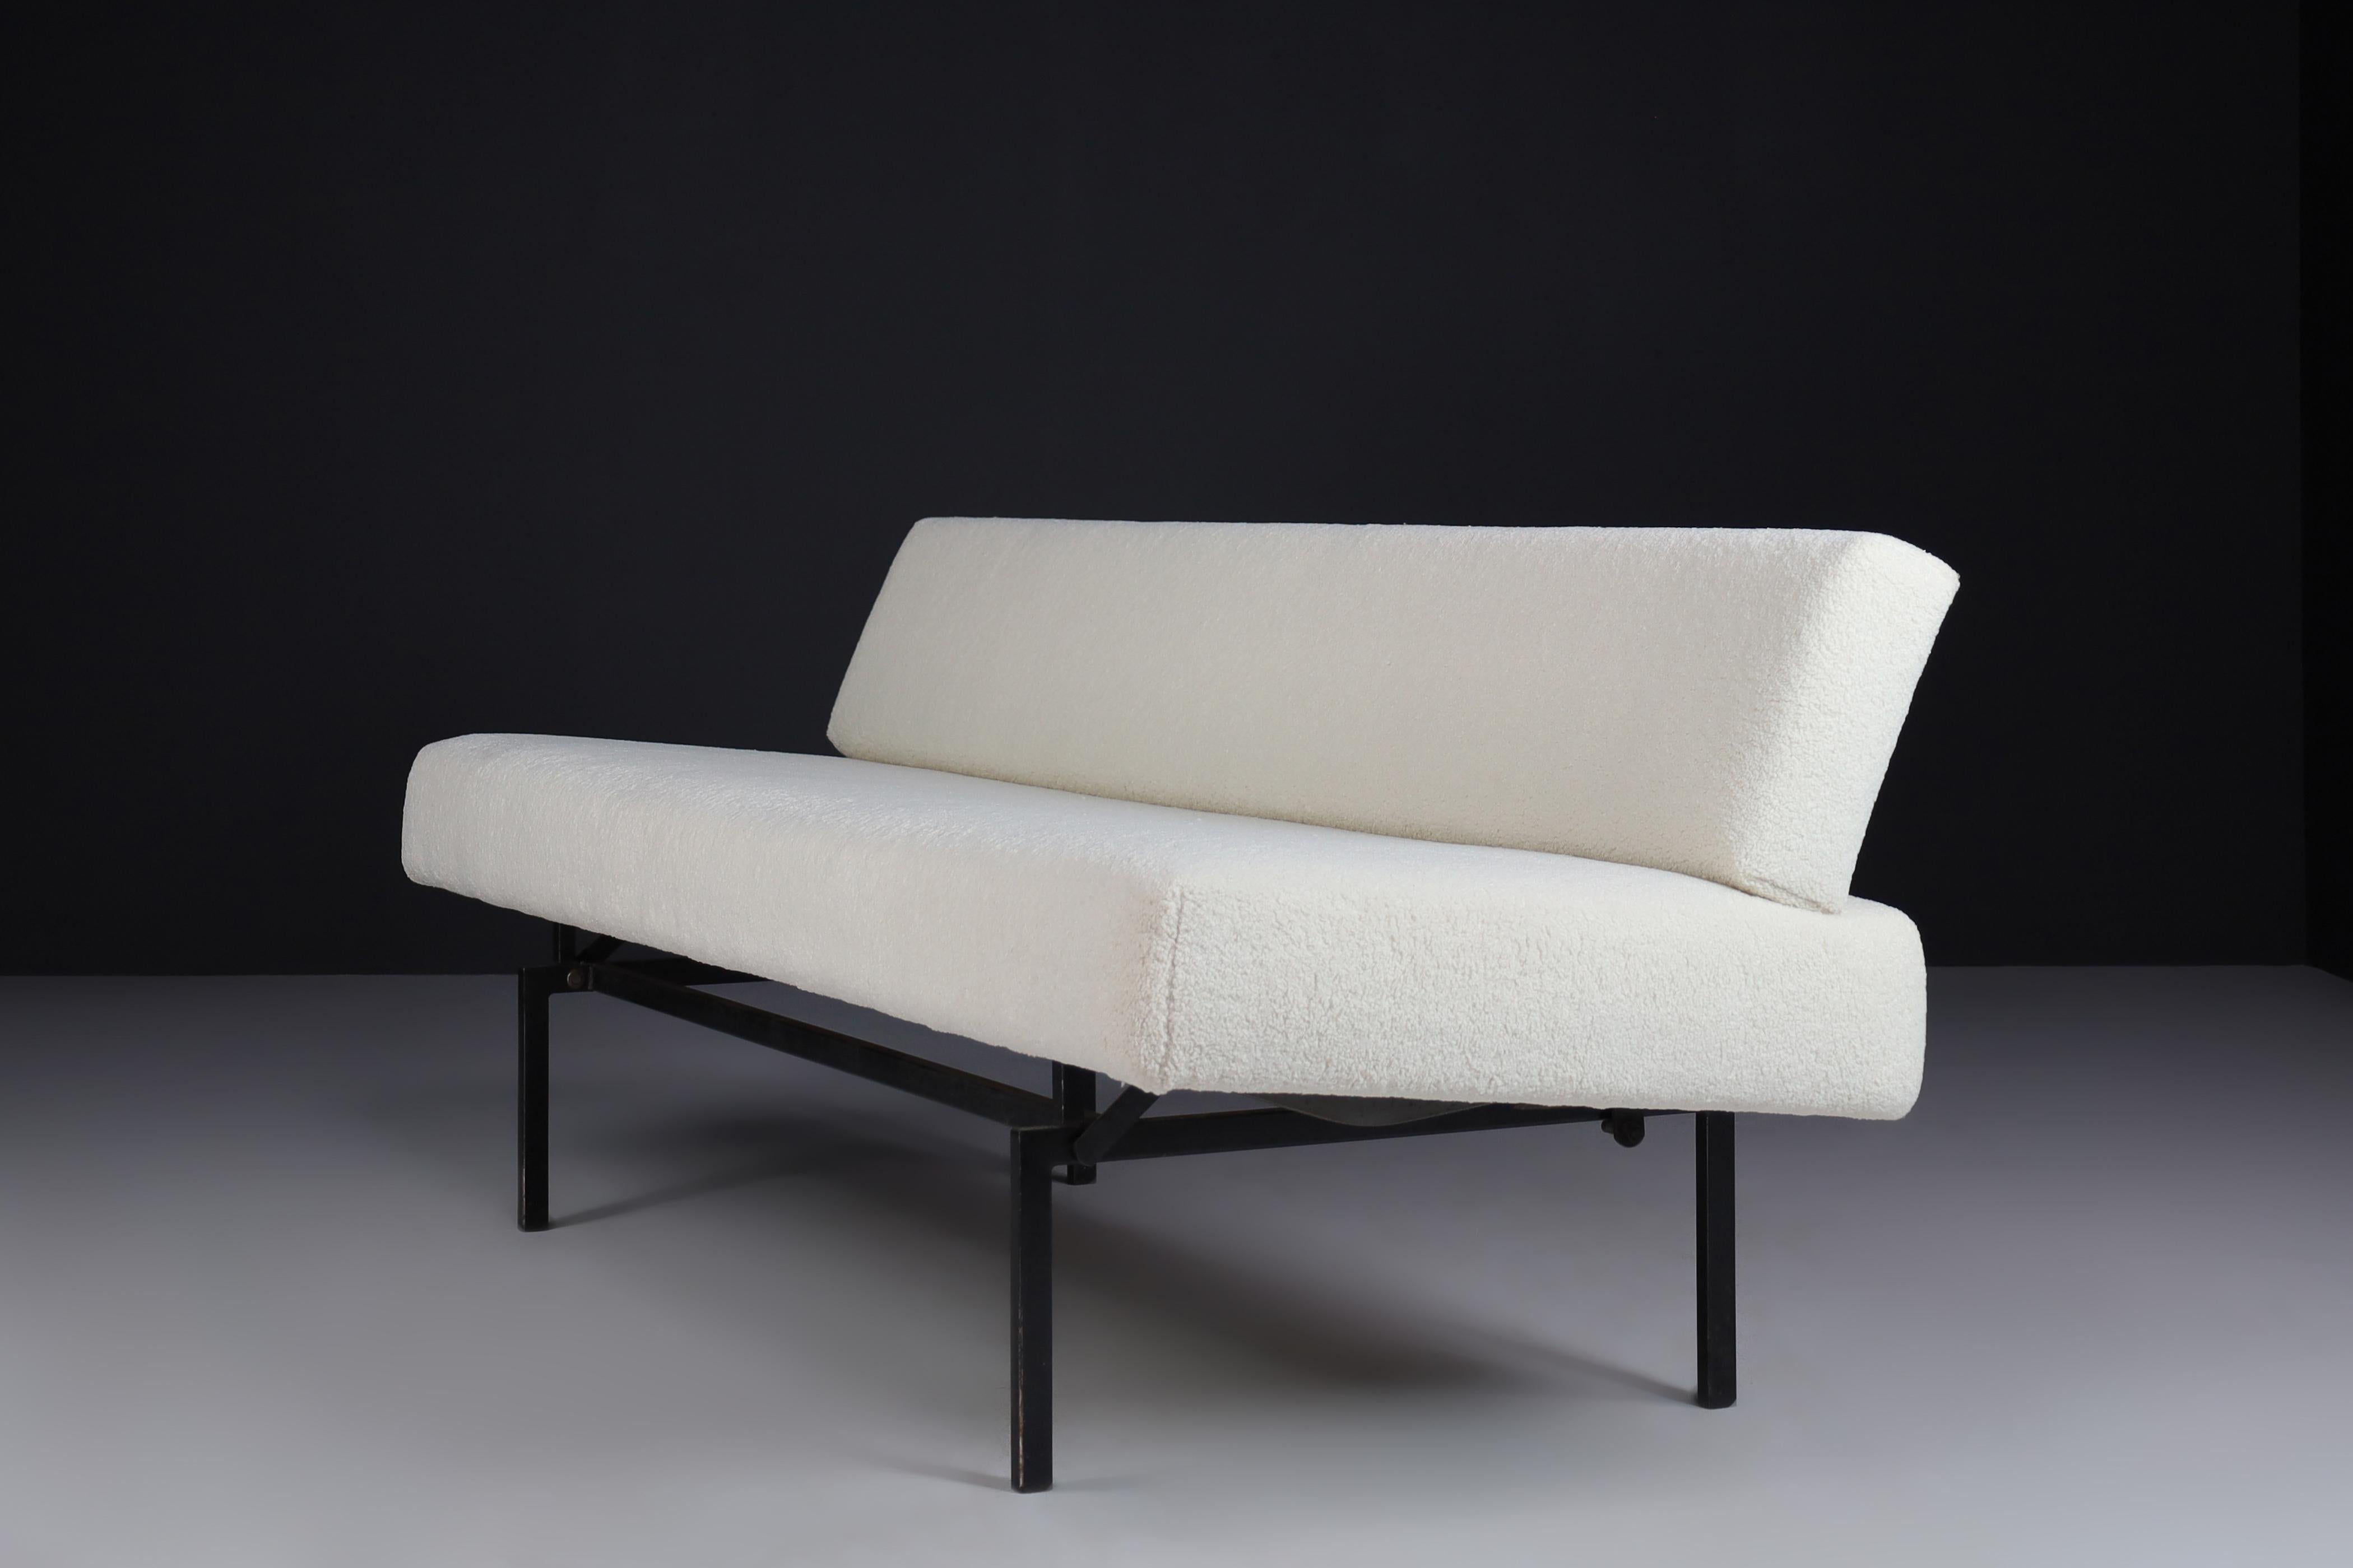 Mid-Century Modern Martin Visser Sofa or Sleeper Sofa for 't Spectrum in New Teddy Fabric, 1960s For Sale